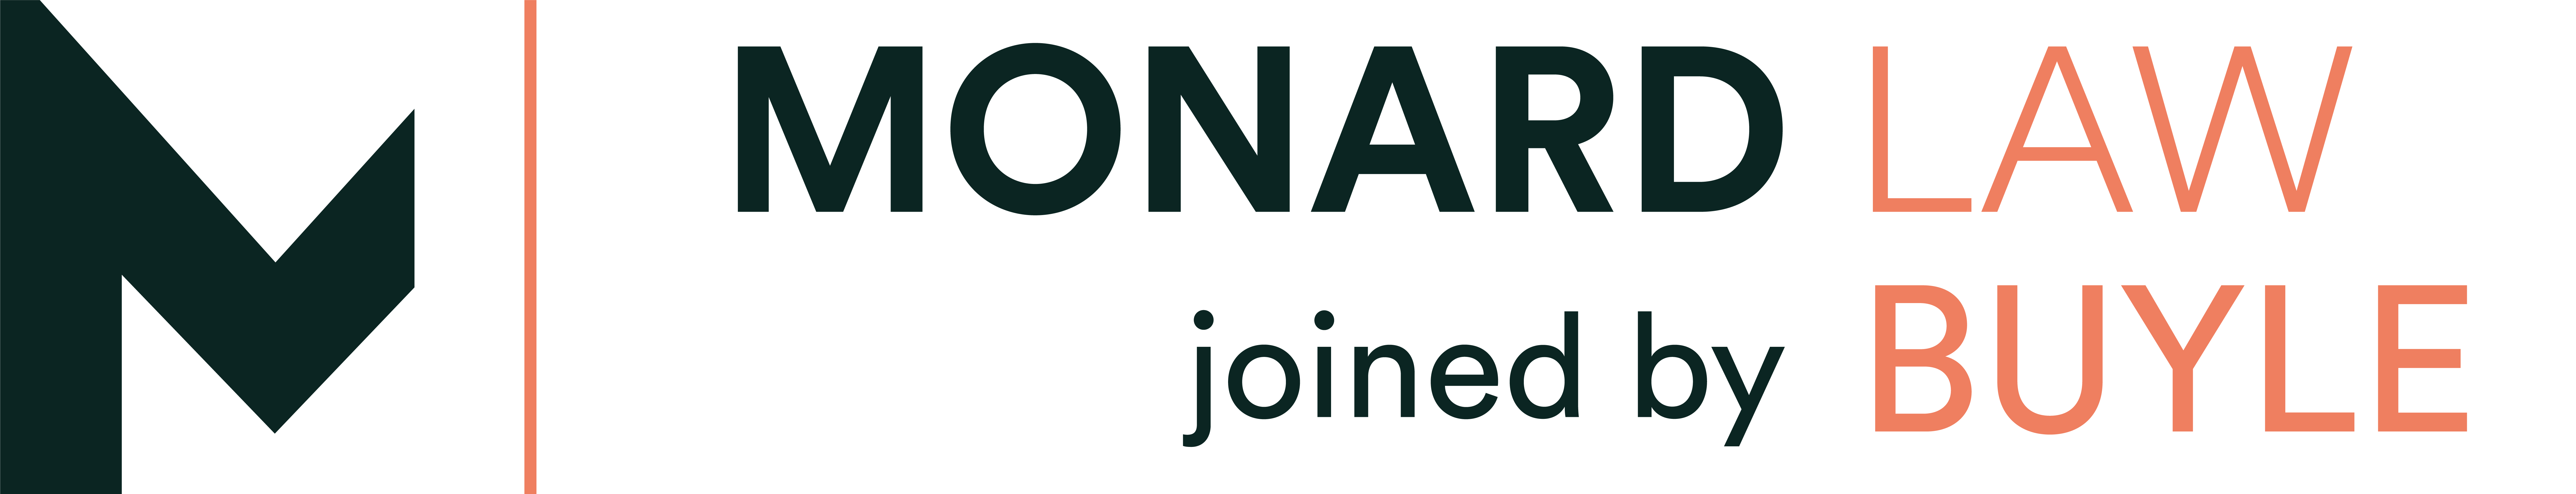 Monard Law logo